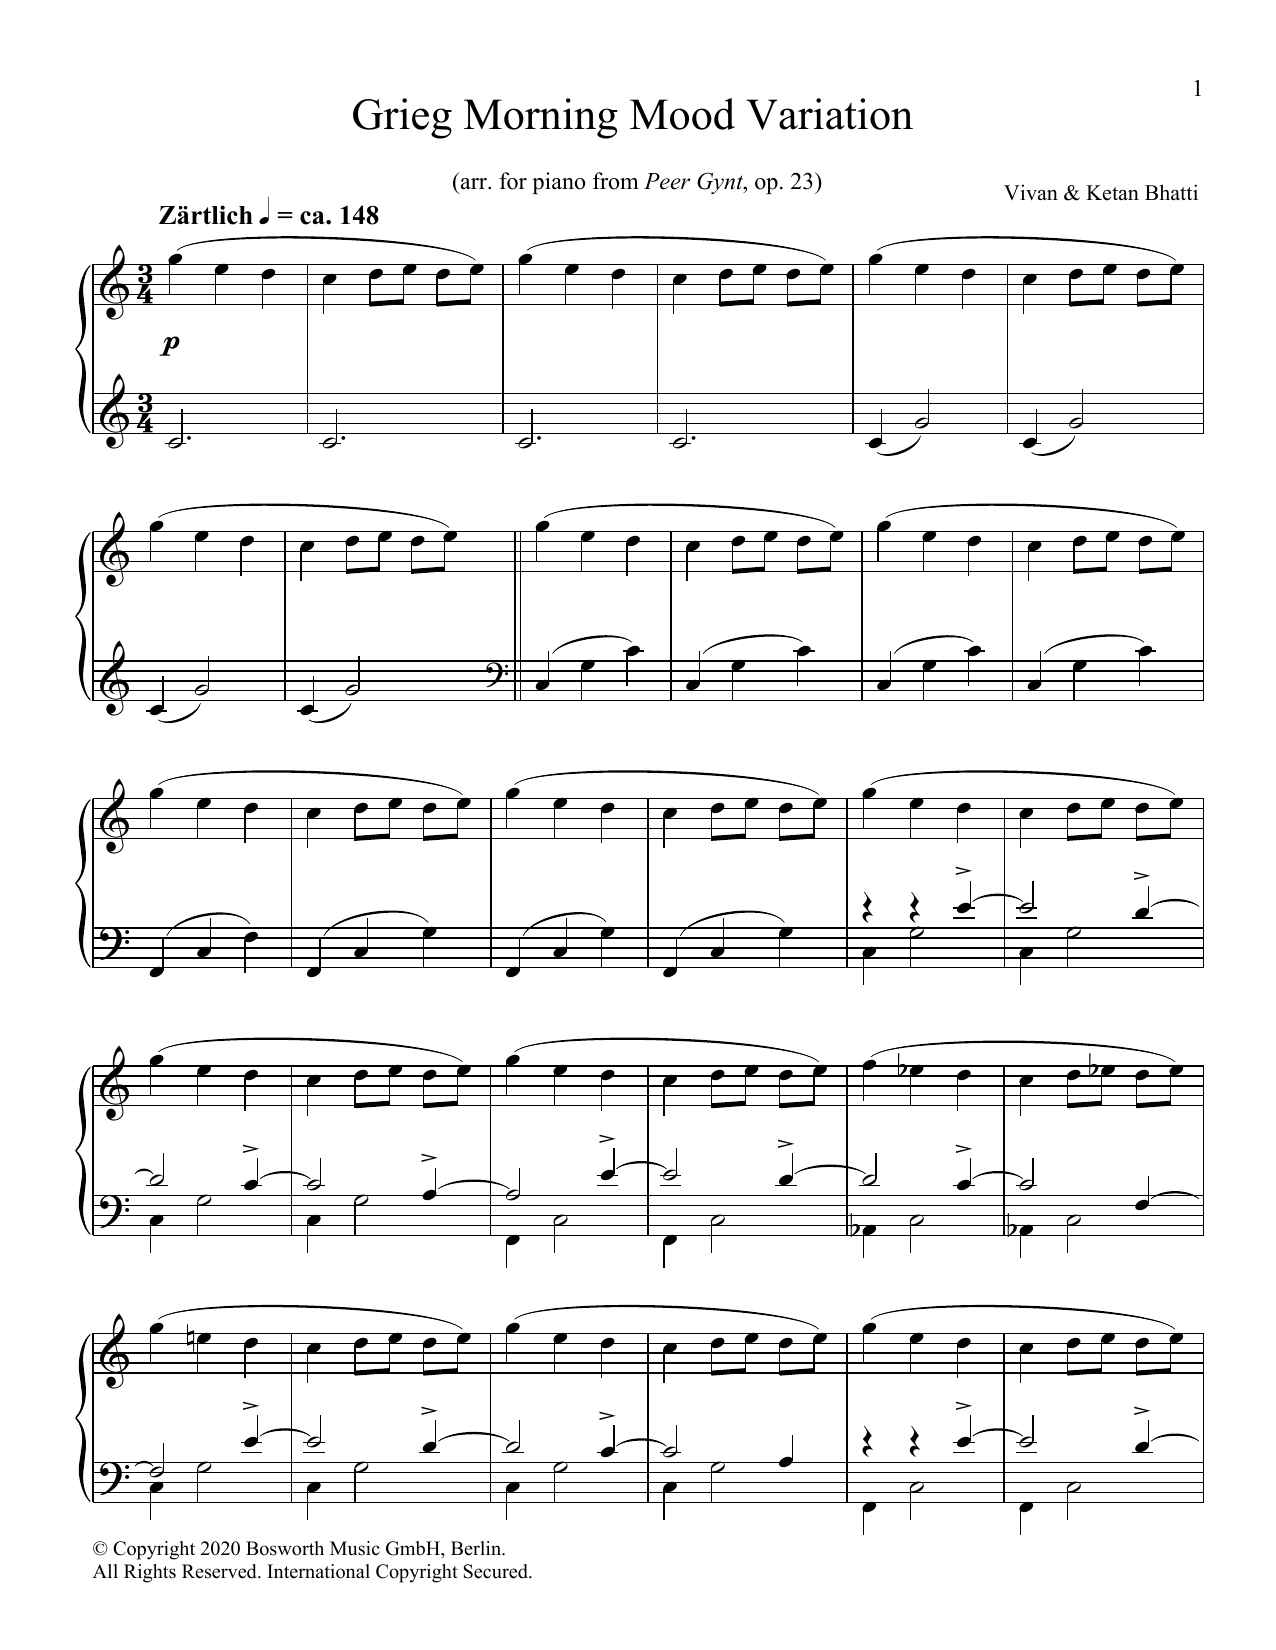 Ketan & Vivan Bhatti Grieg Morning Mood Variation Sheet Music Notes & Chords for Piano Solo - Download or Print PDF